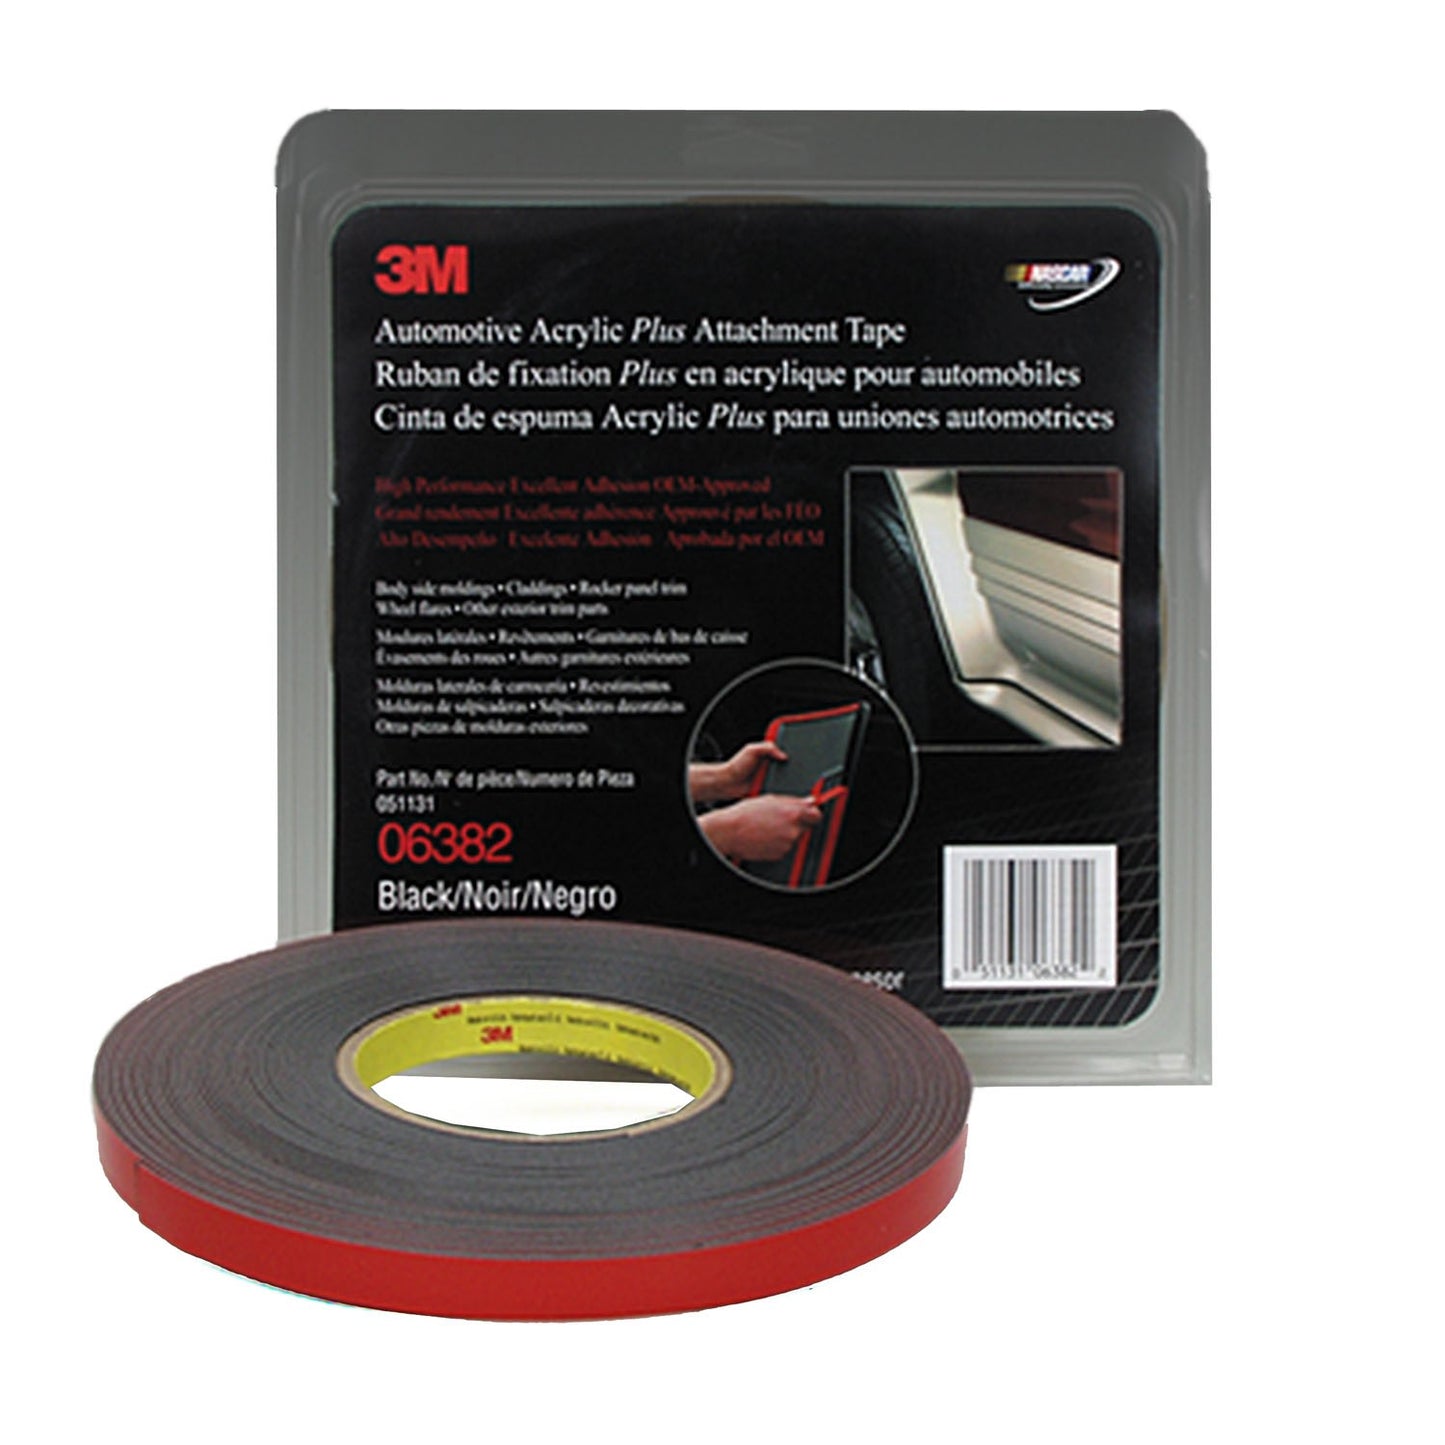 3M™ Automotive Acrylic Plus Attachment Tape, Black, 1/2 in x 20 yd